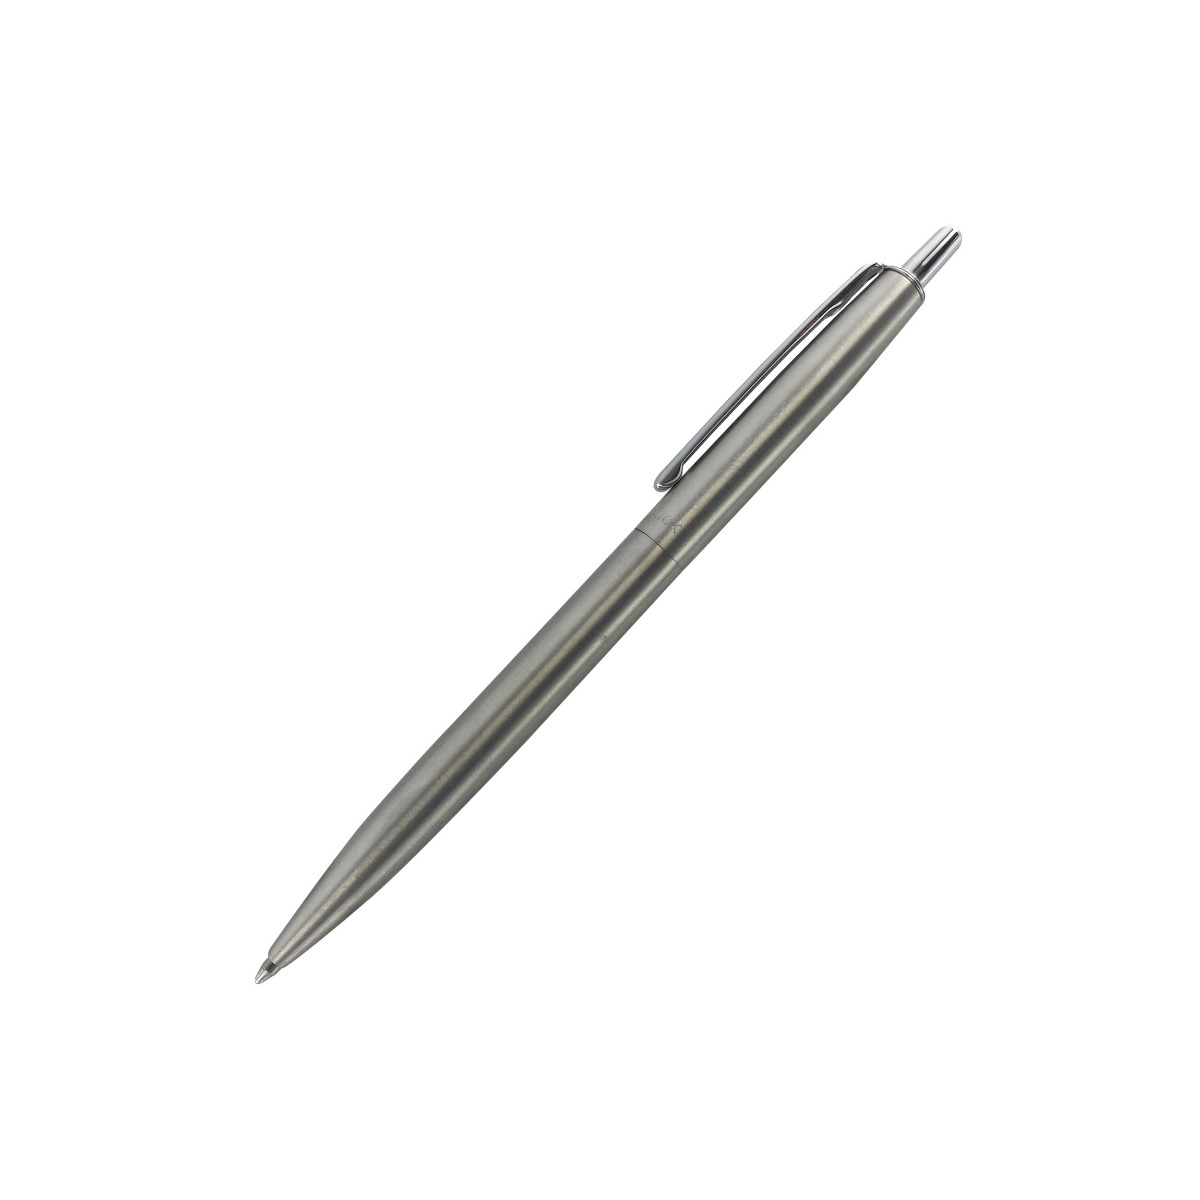 K- NINE Model No: 11912 Techno Click  Natural Stainless Steel Body Ball pen